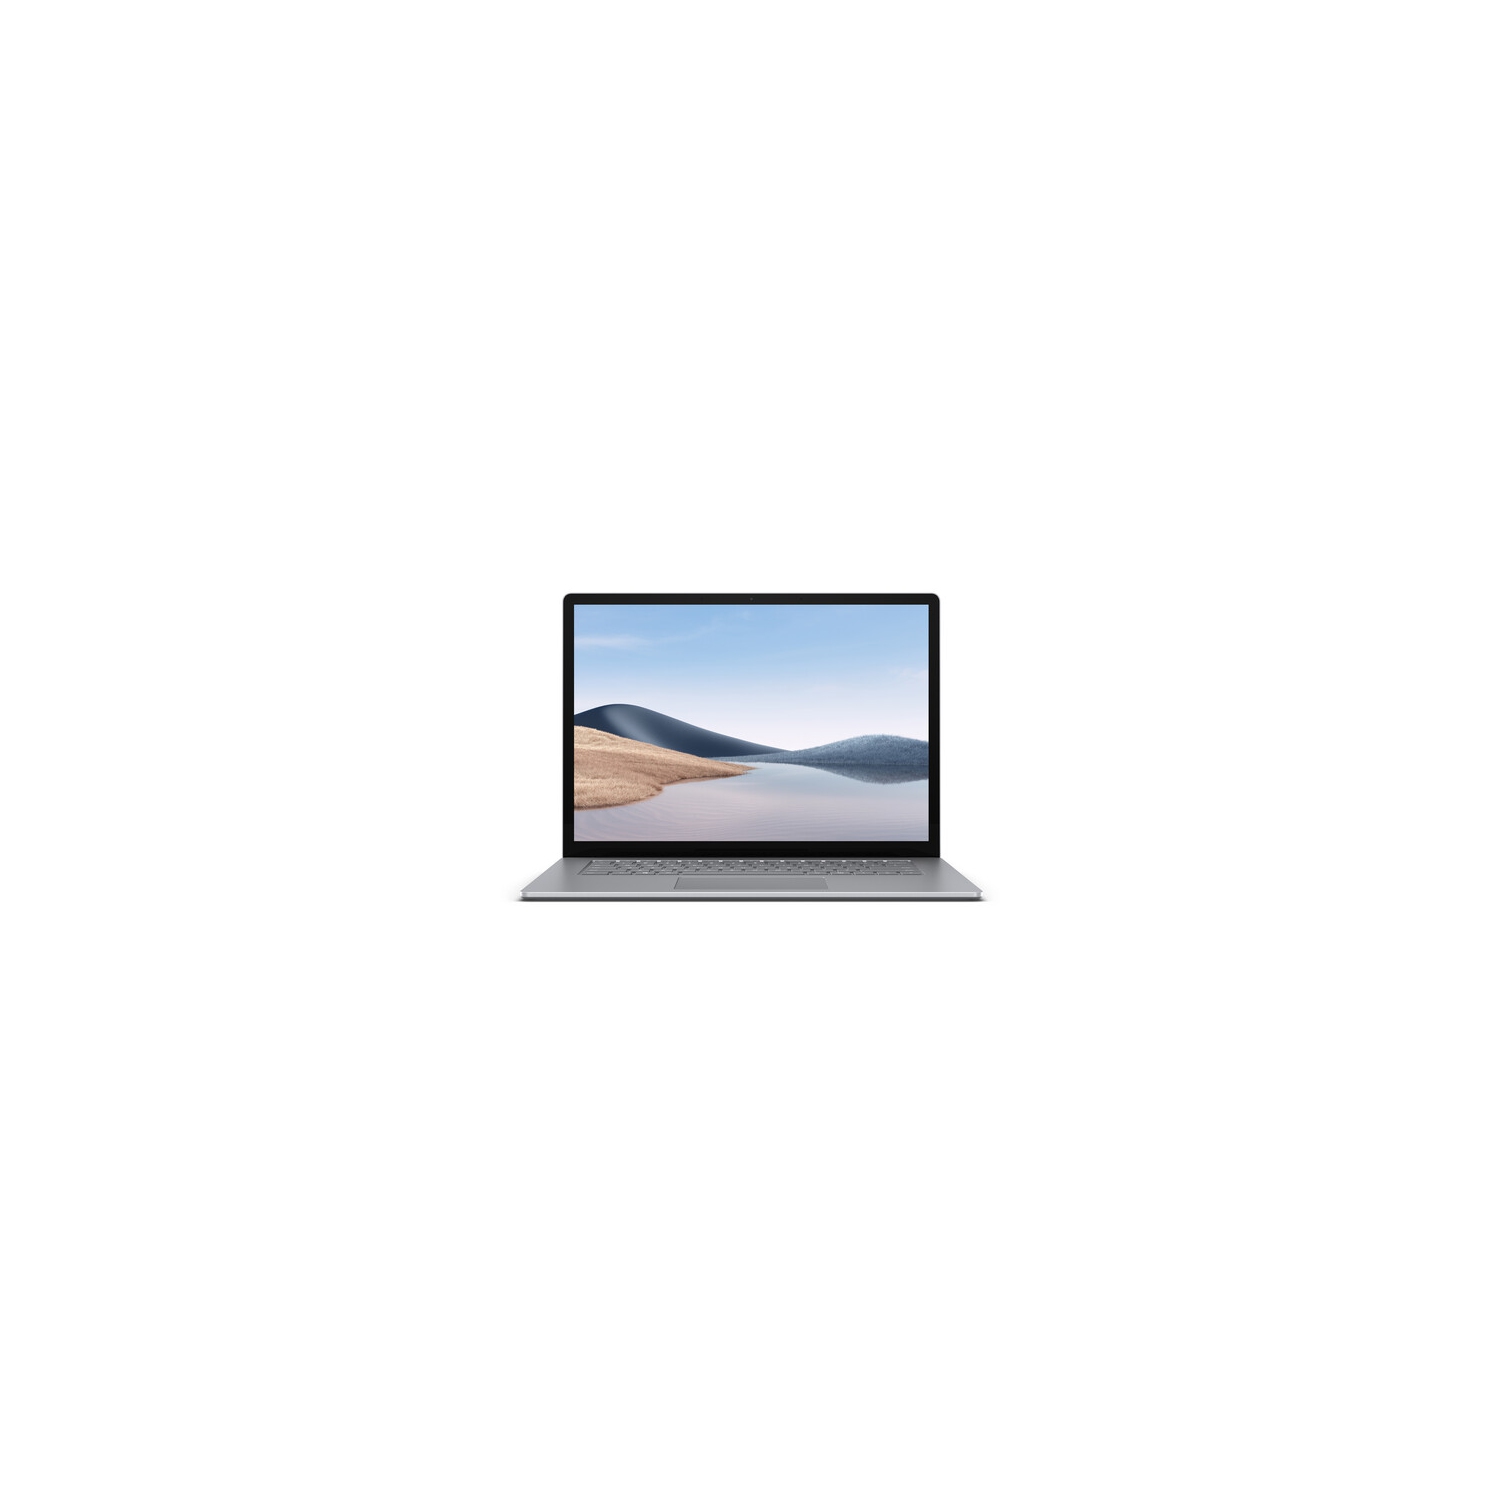 Microsoft Surface Laptop 4 Touchscreen 13.5''- (AMD Ryzen 5-4680U/256GB SSD/8GB RAM/Win 10 Pro)-Platinum-Microsoft Certified Refurbished